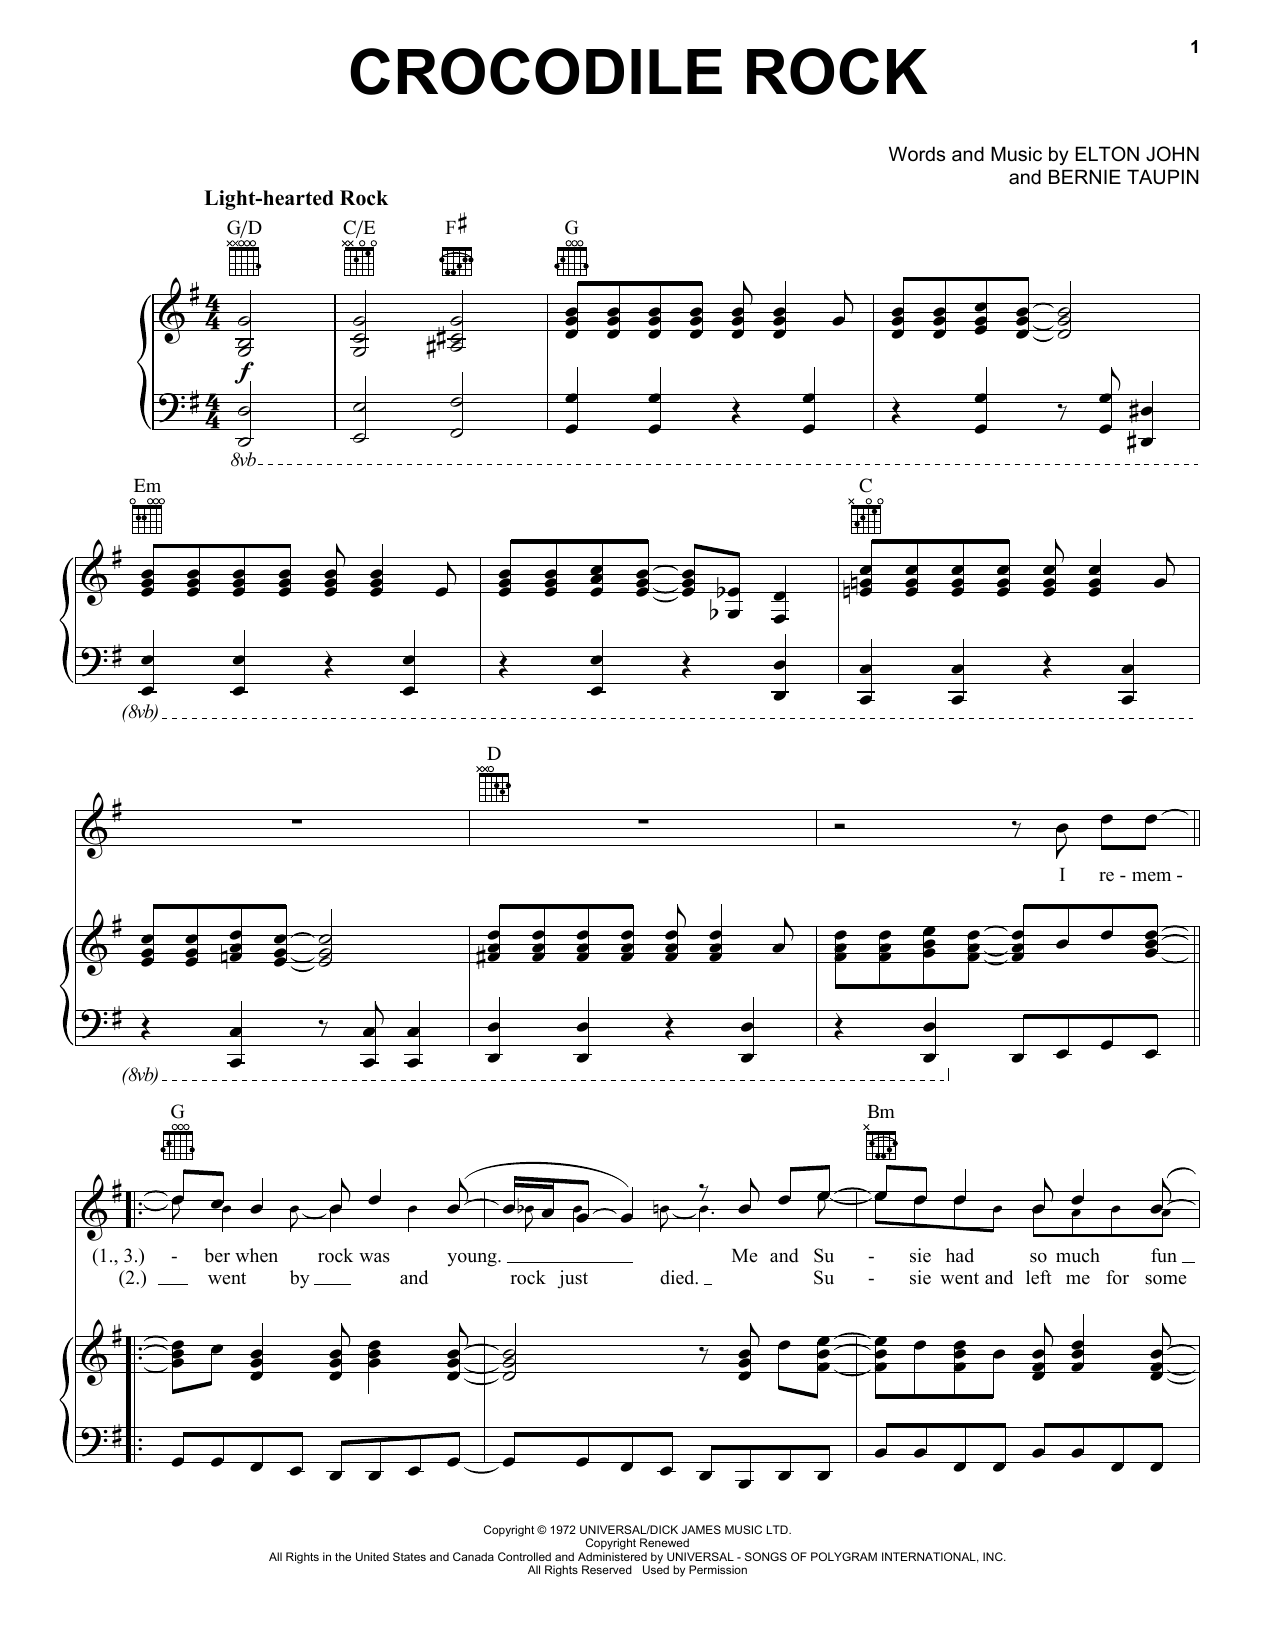 Elton John Crocodile Rock Sheet Music Notes & Chords for Flute Duet - Download or Print PDF